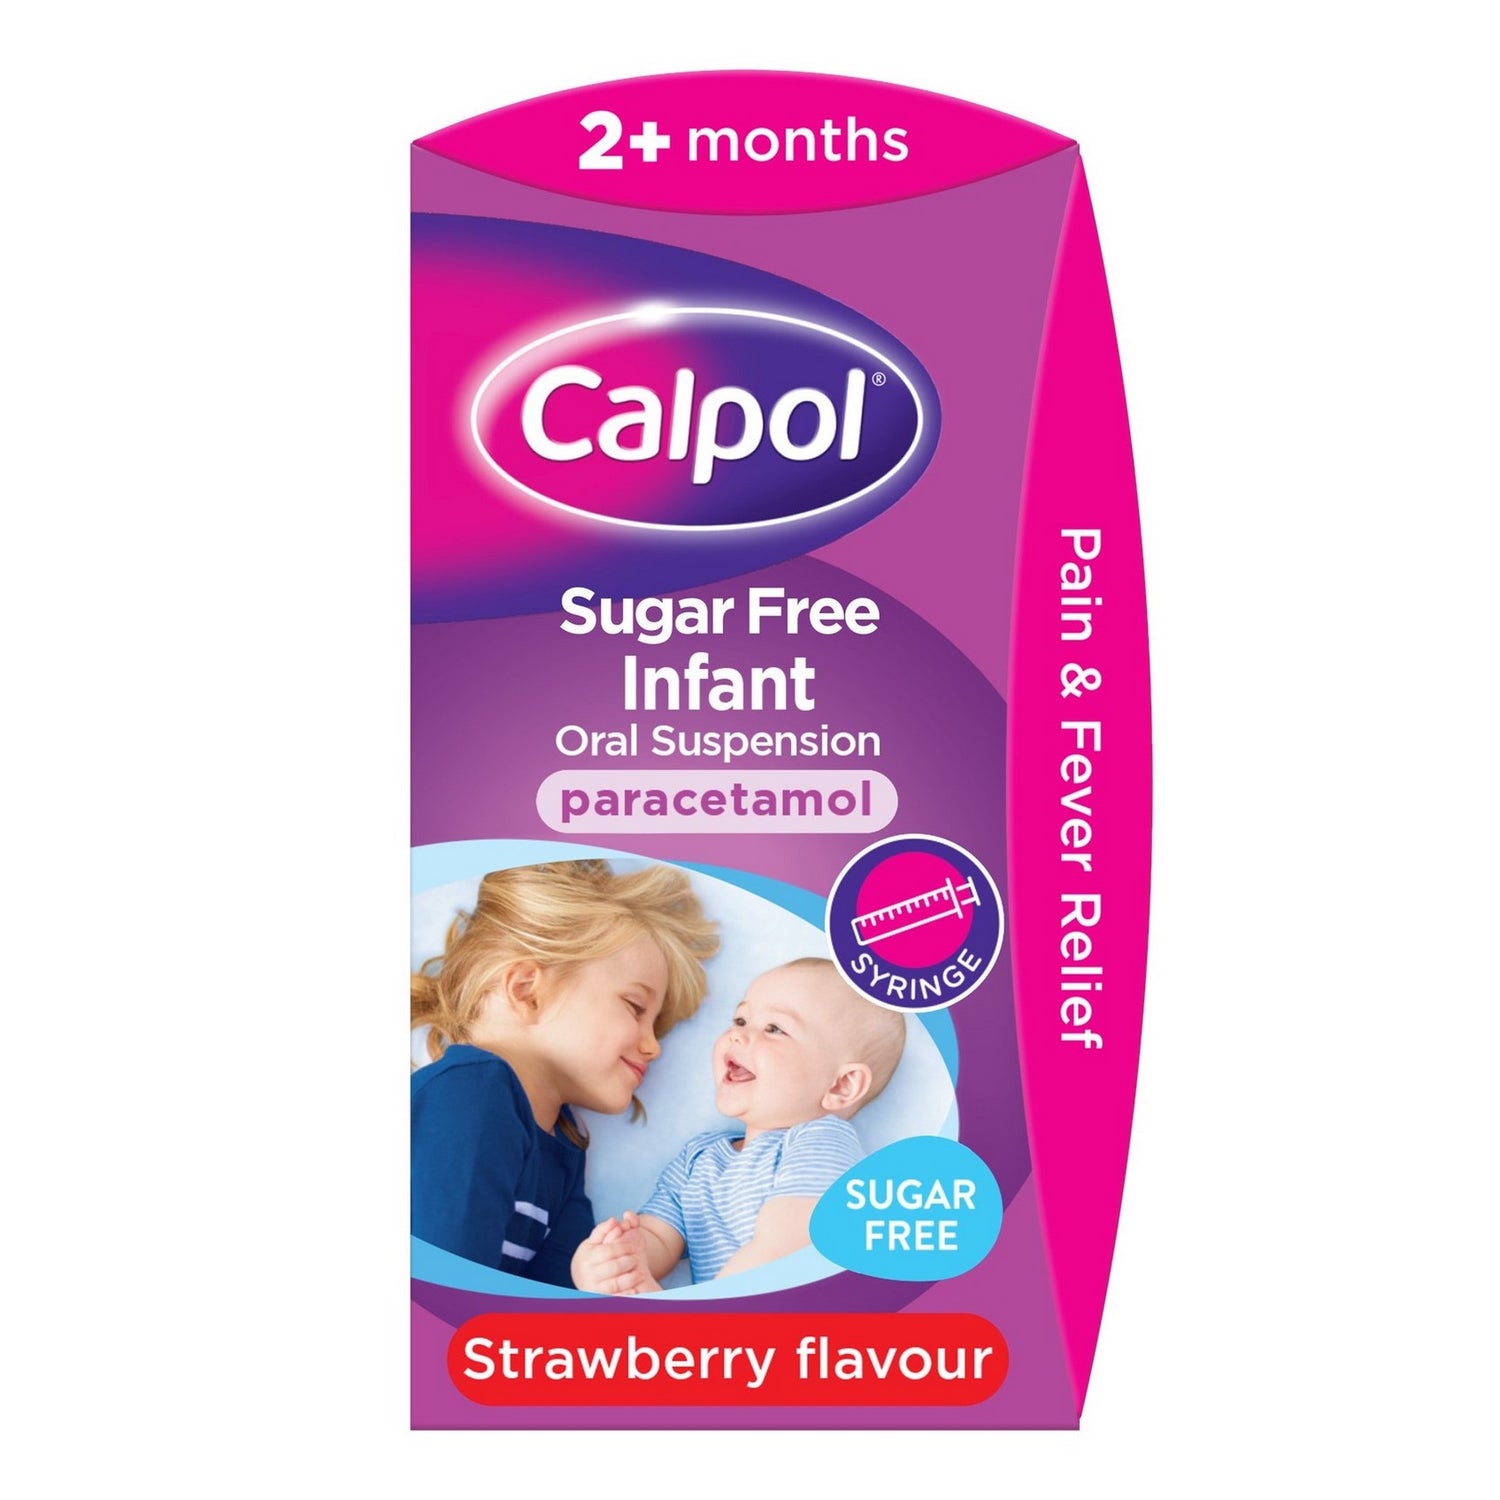 Calpol Infant Suspension Paracetamol Sugar Free 60ml